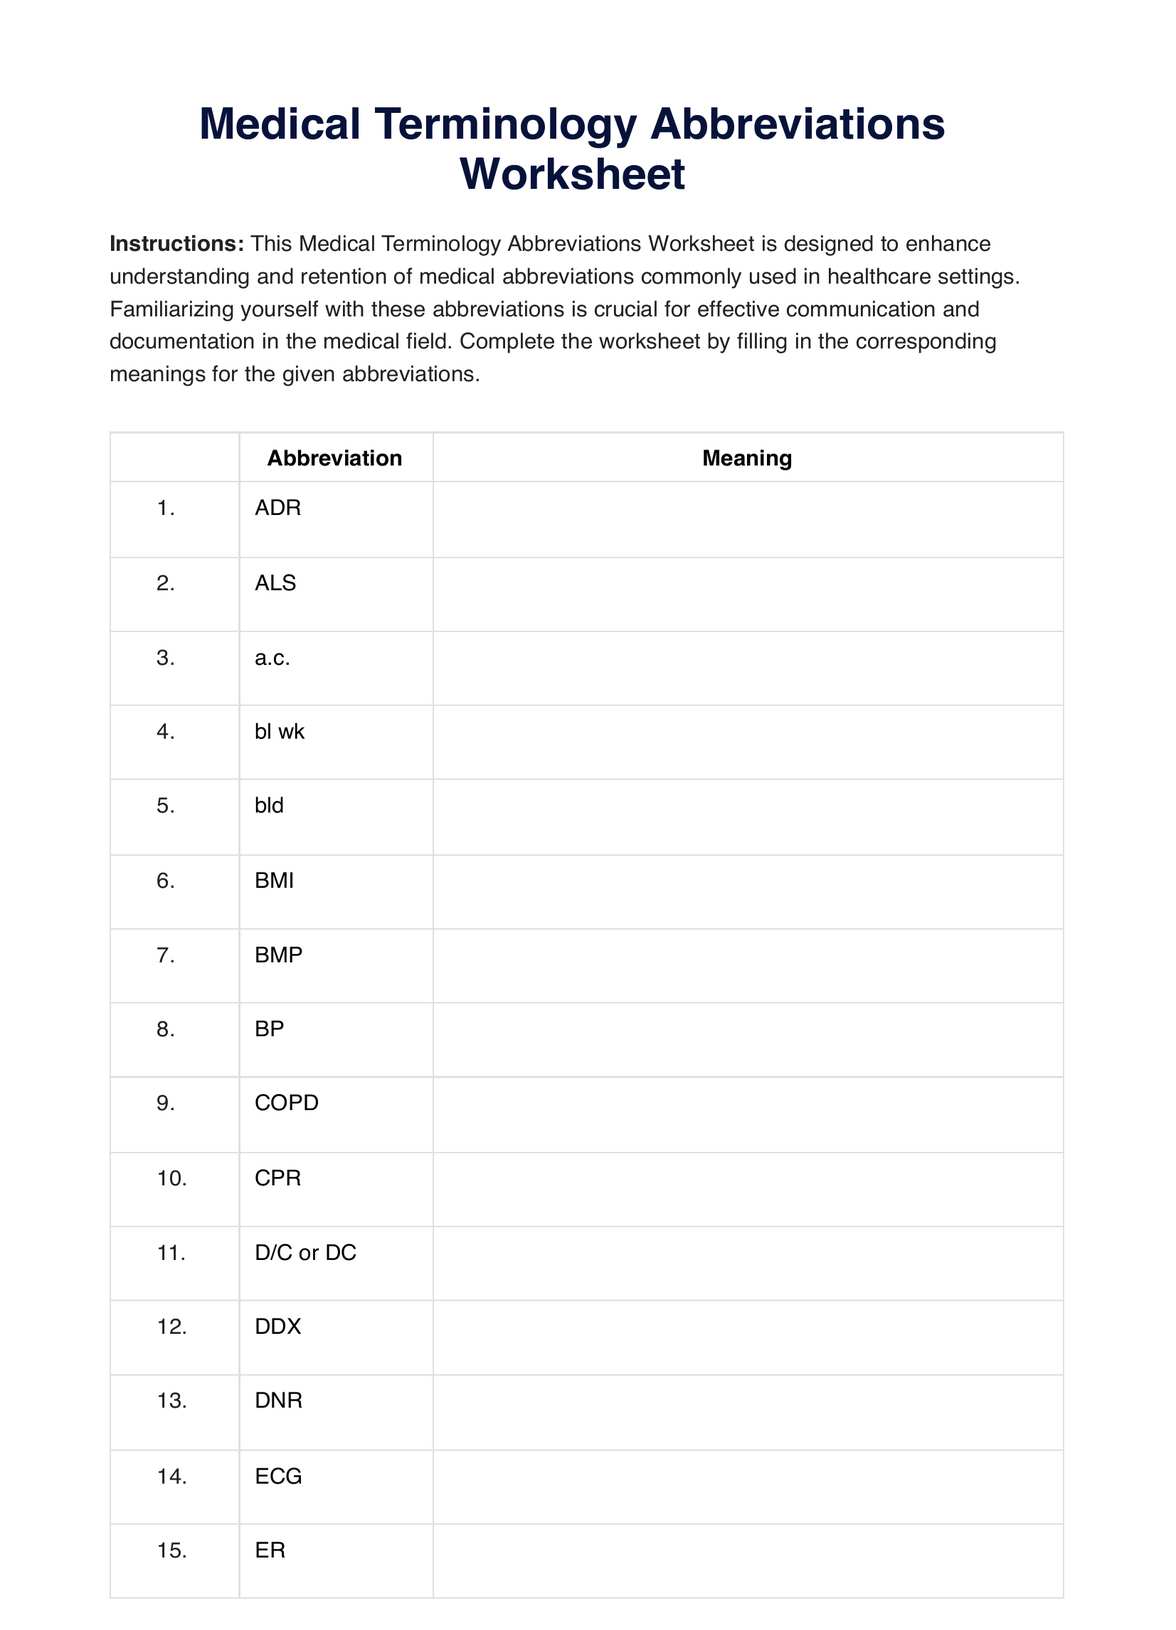 Medical Terminology Abbreviations Worksheet PDF Example